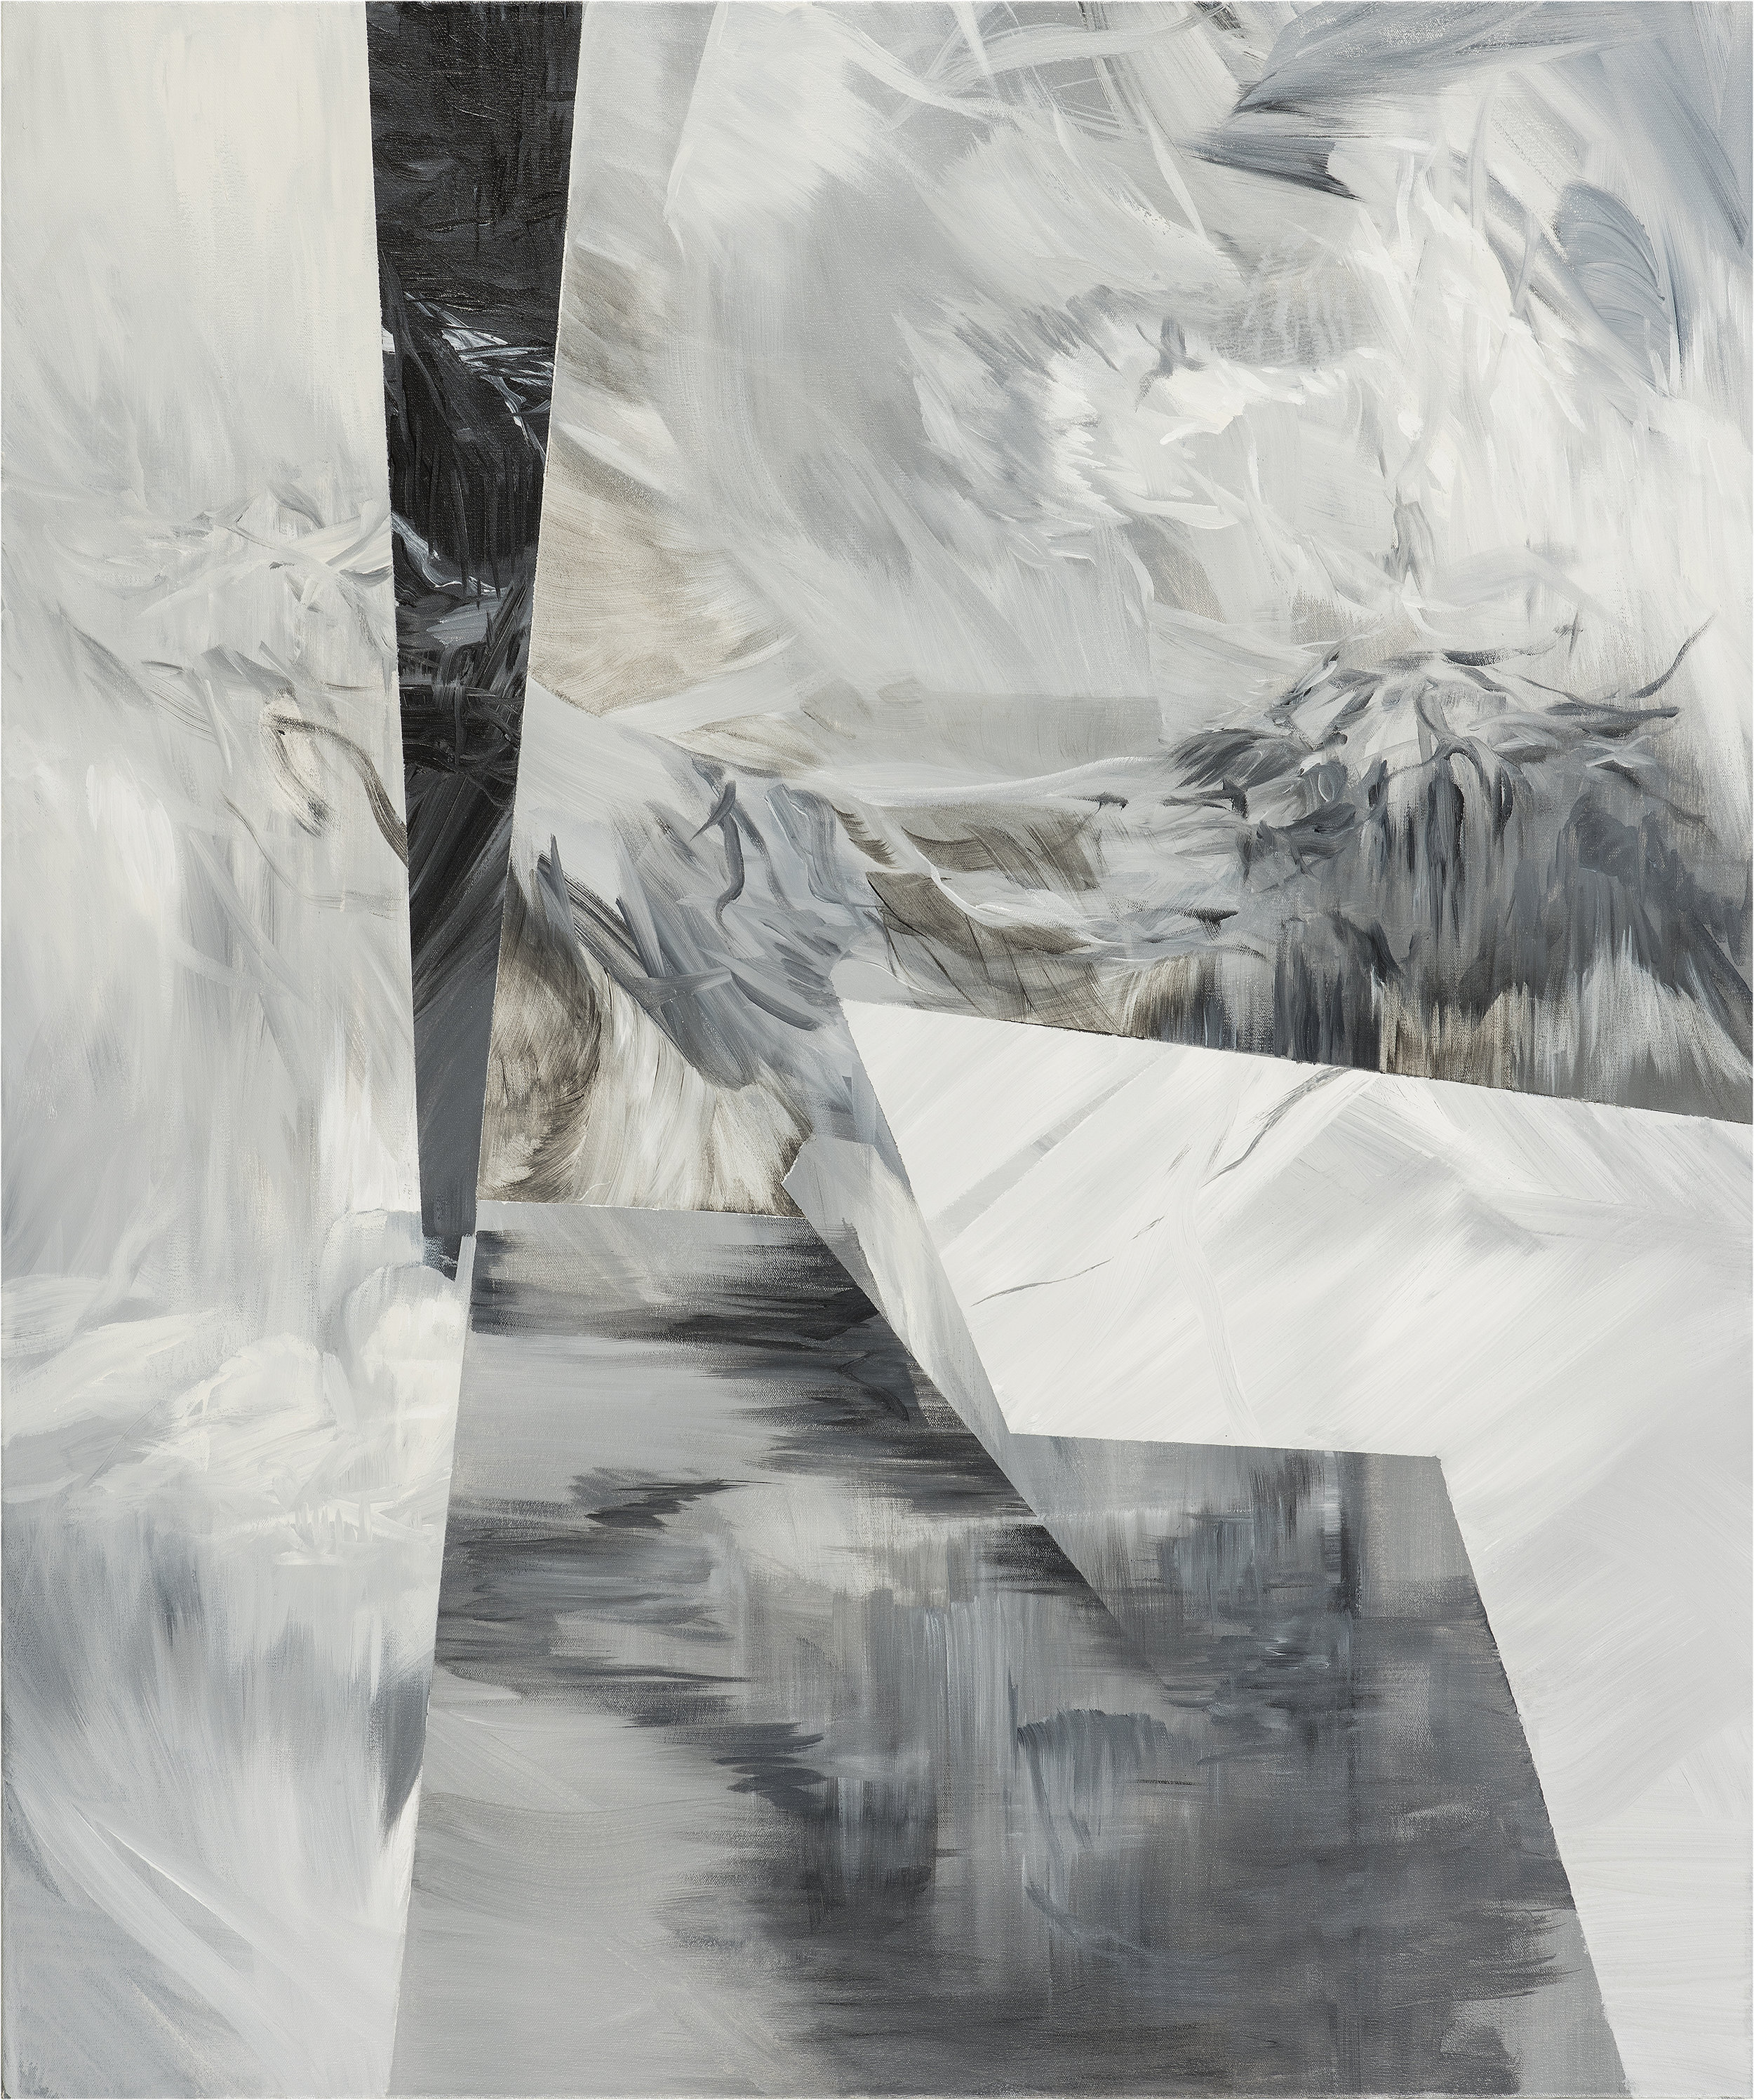   Altar - Triptych  (right side), 2014   acrylic on canvas  43" x 36" 